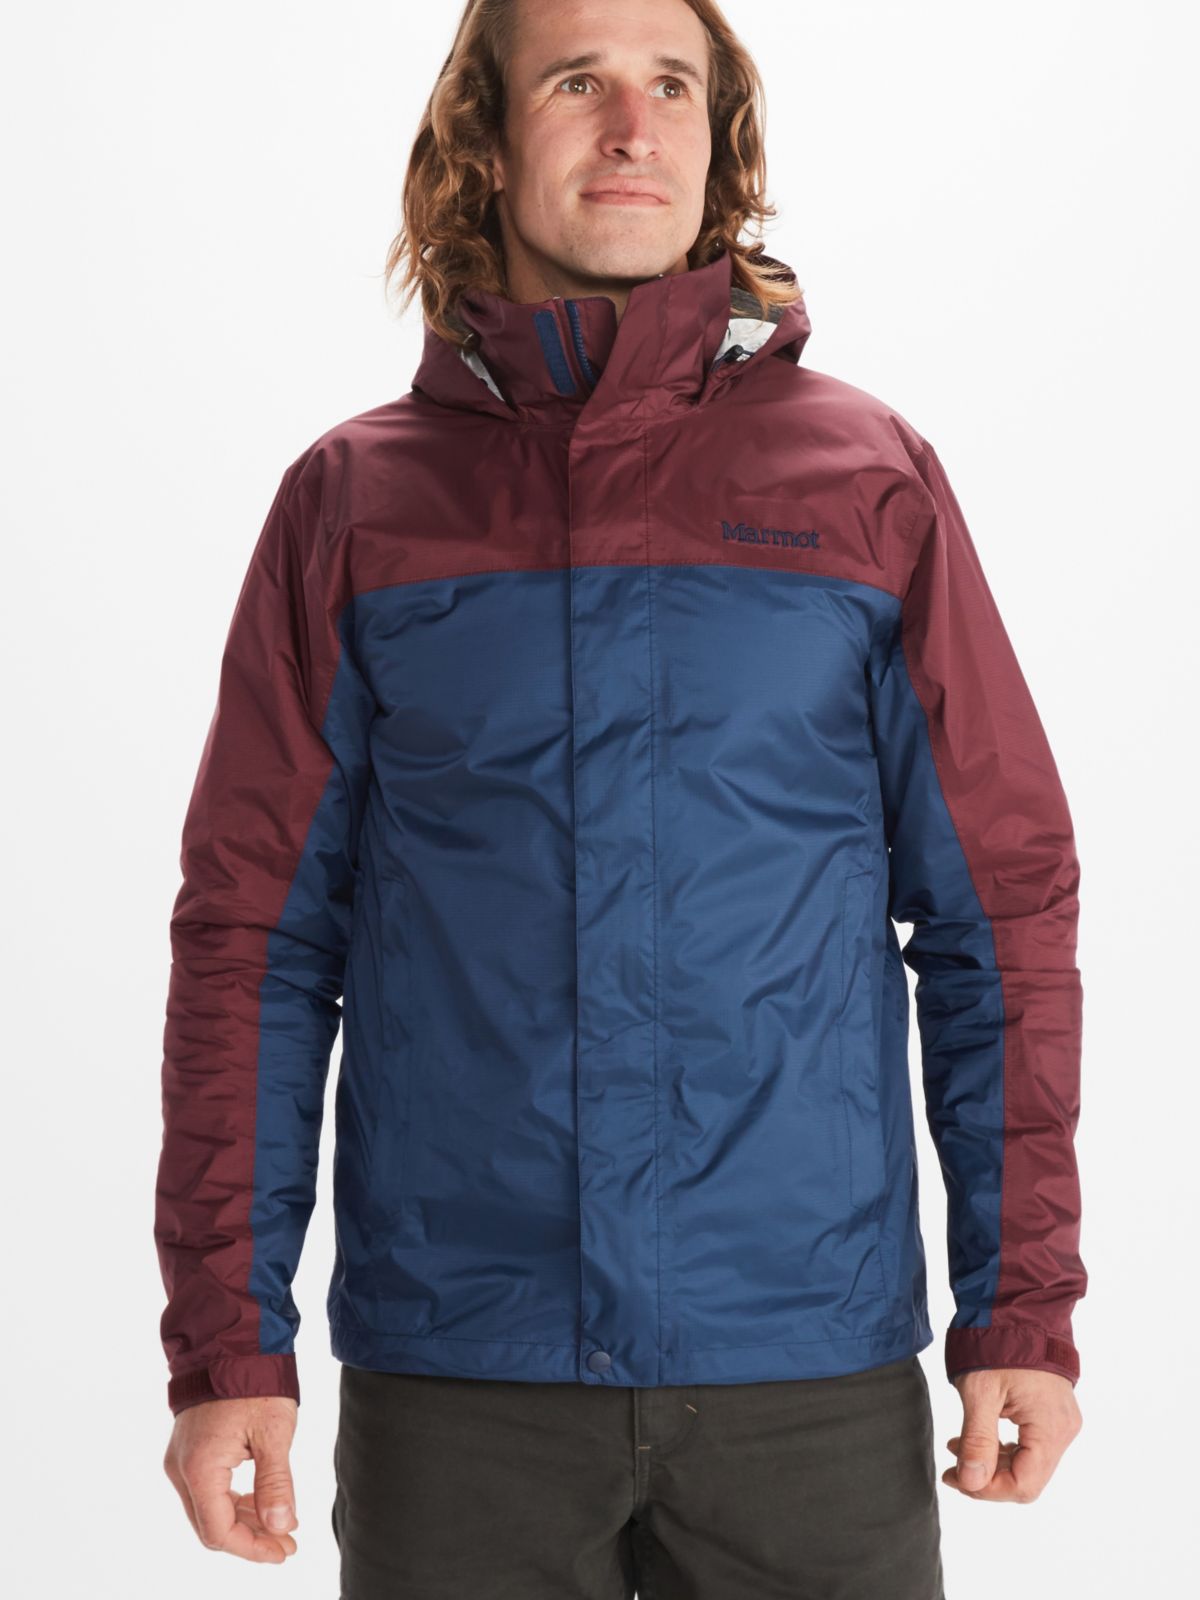 Model wears Marmot mens rain jacket in red and blue